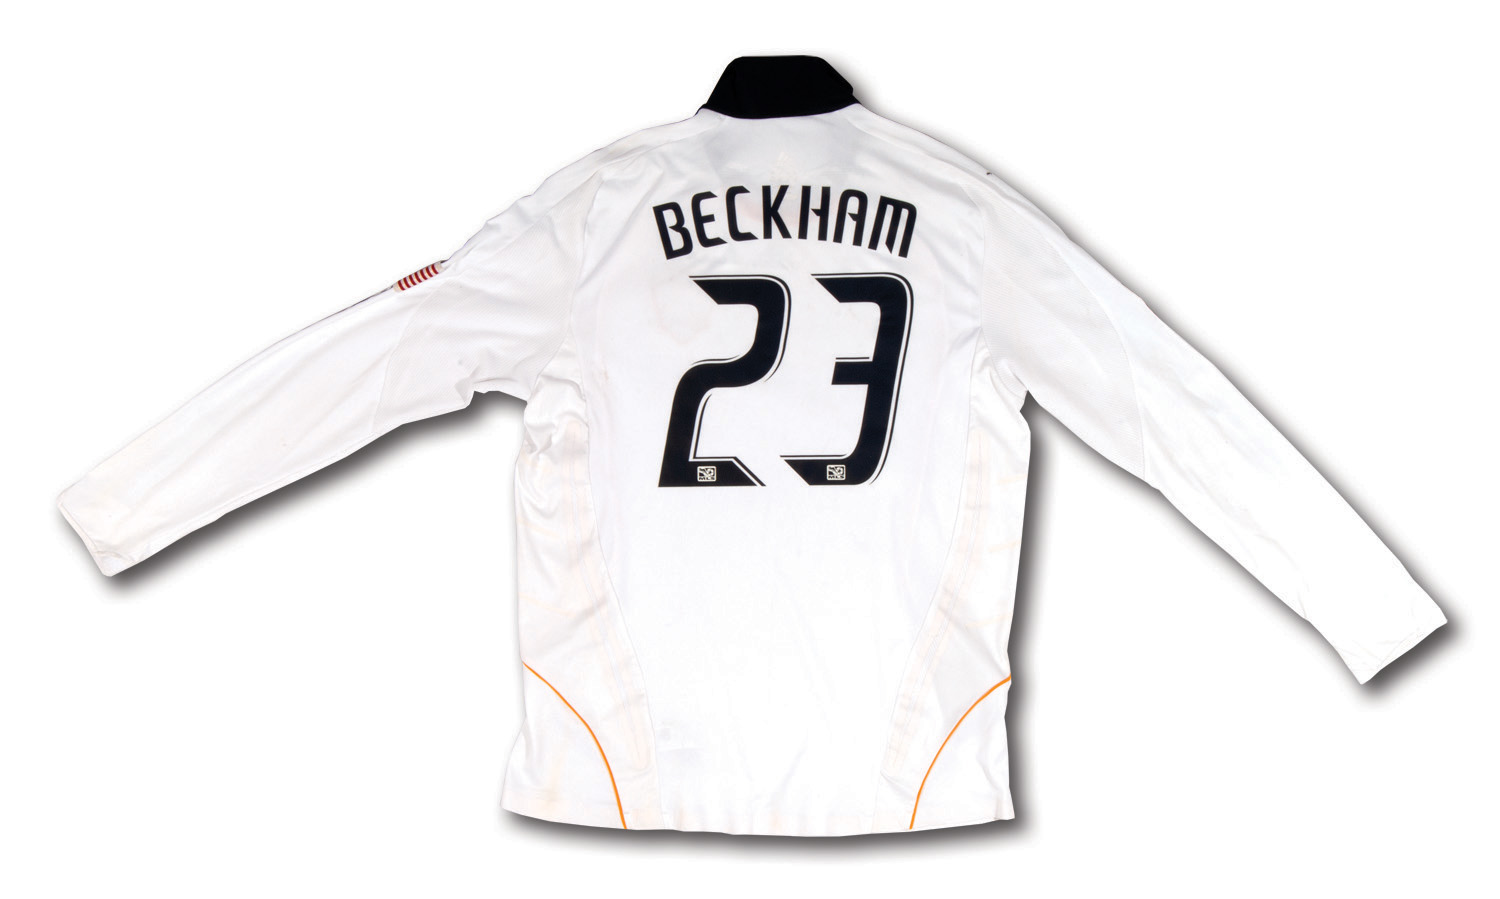 David Beckham wore the No.23 shirt because of Michael Jordan